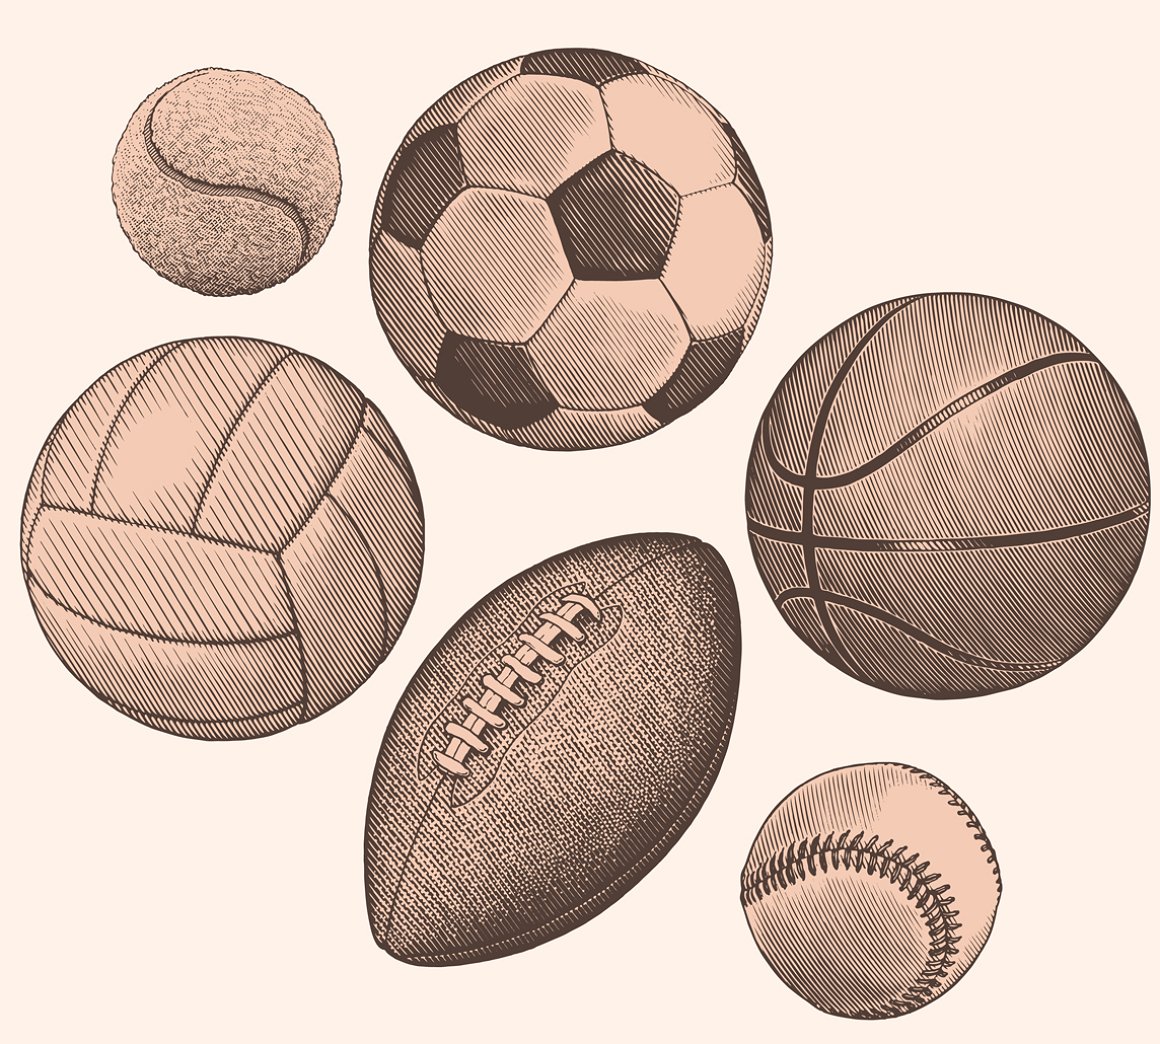 Diverse of vintage sports balls.